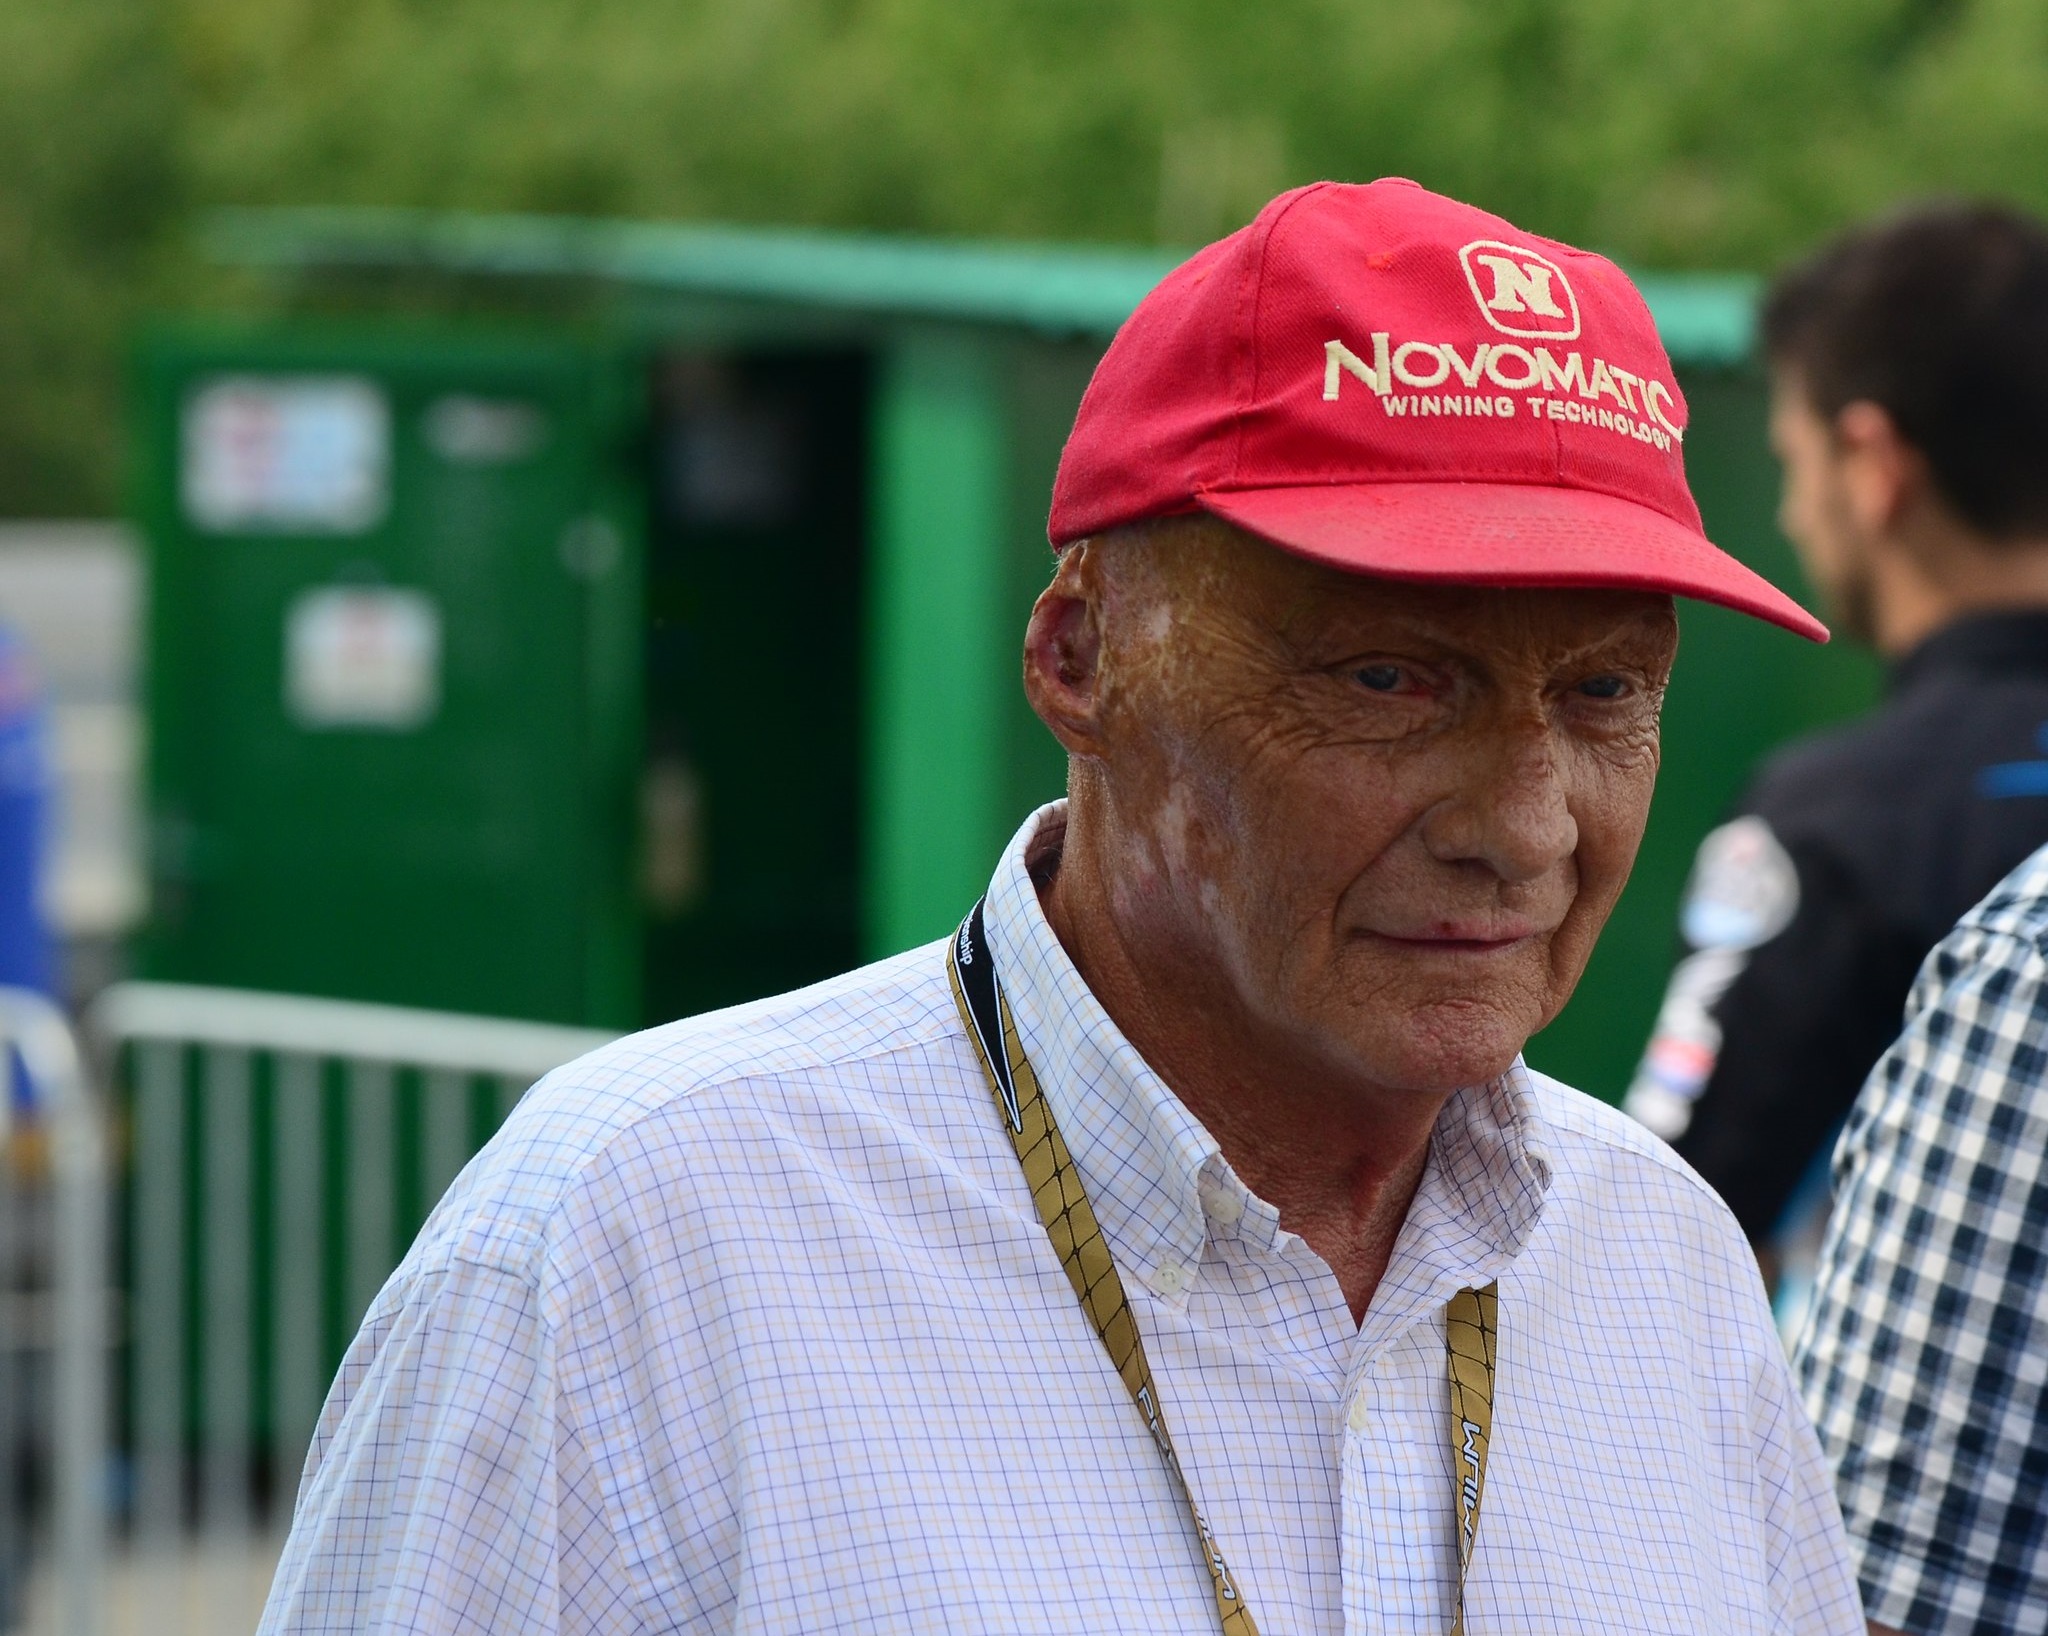 F1 Honors Niki Lauda at Monaco Grand Prix - The News Wheel